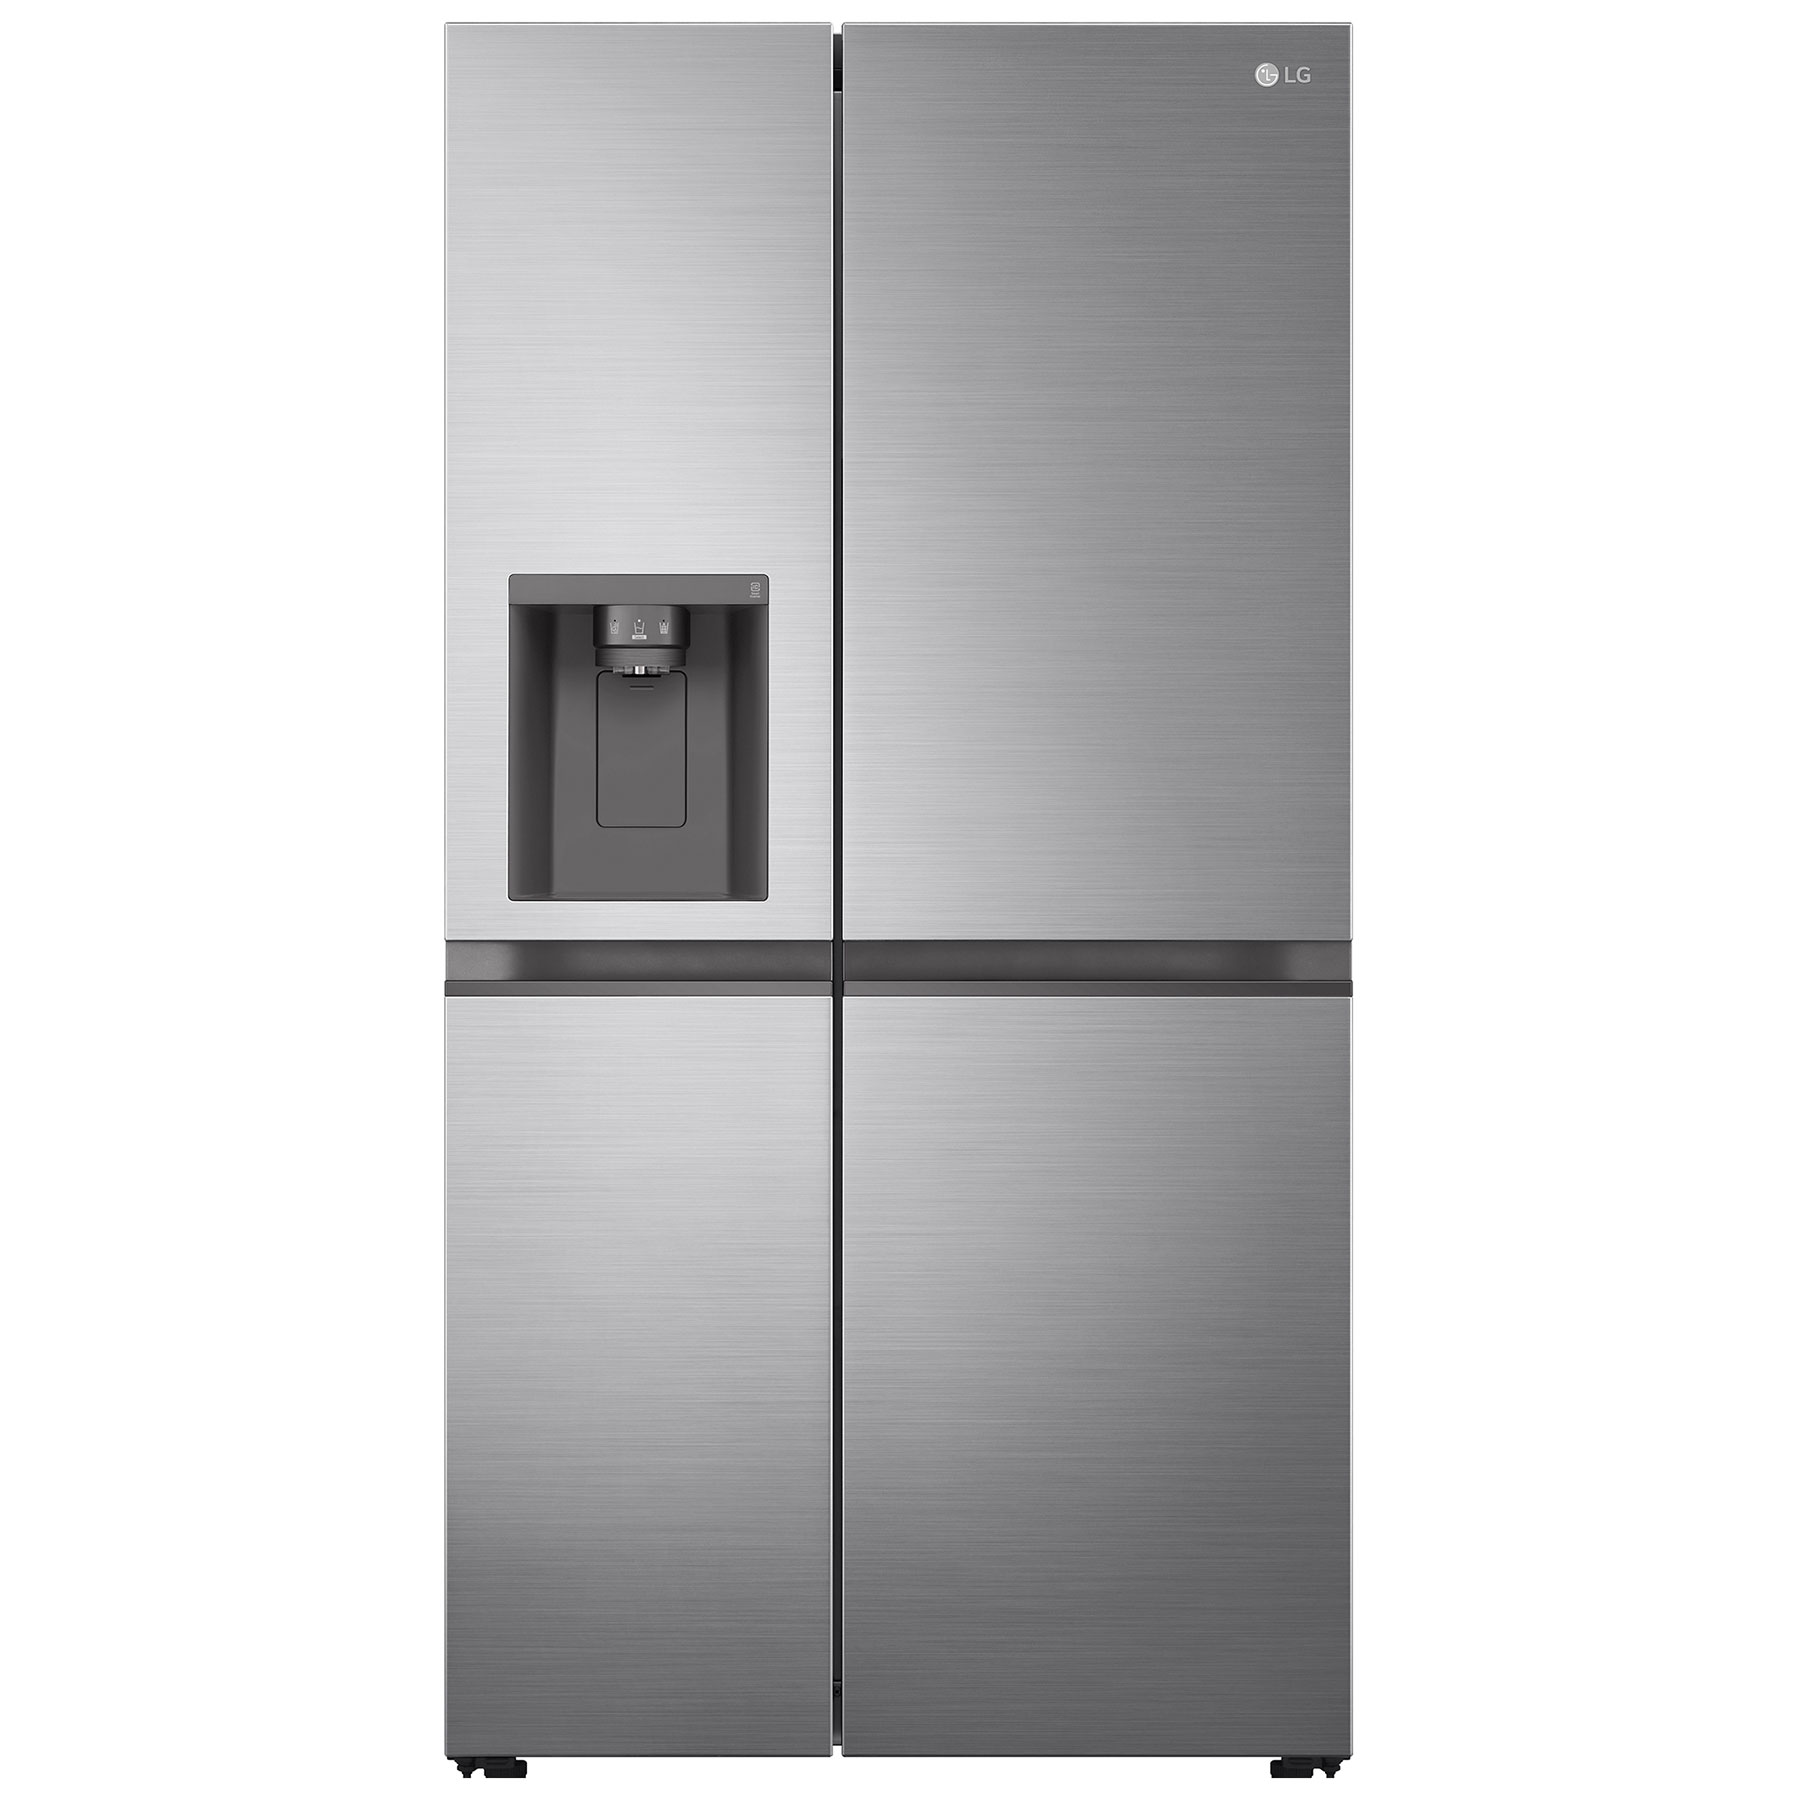 LG GSLV51PZXL American Fridge Freezer in Shiny Steel NP I W E Rated